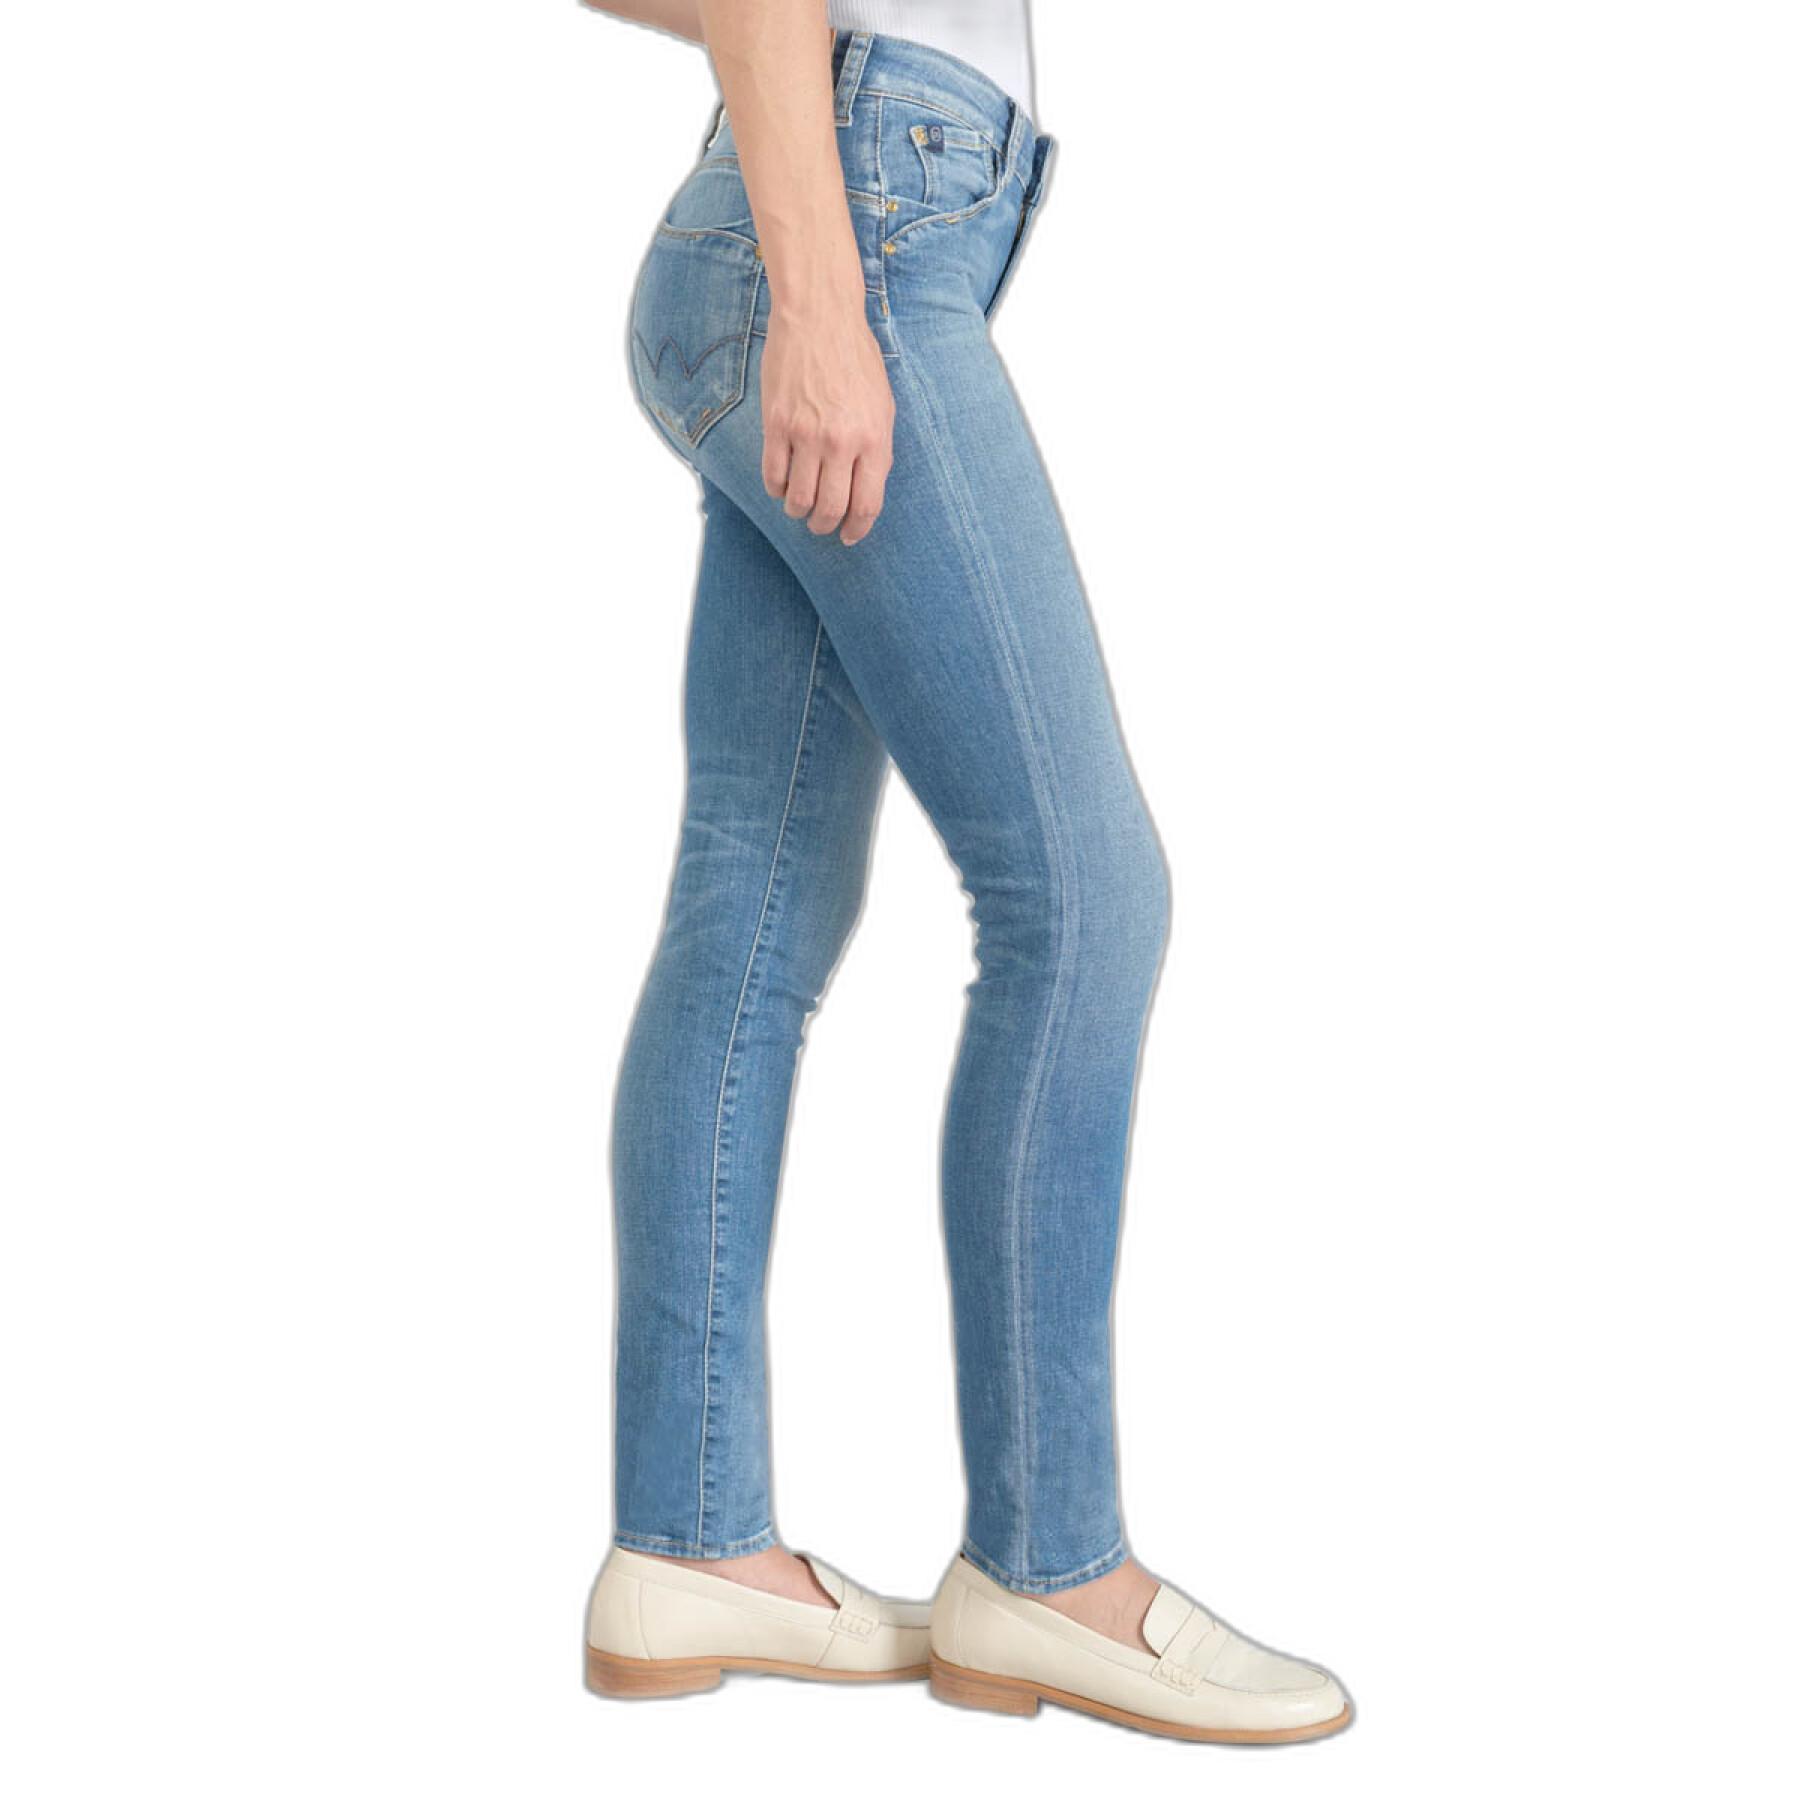 Jeans kobieta z wysoką talią Le Temps des cerises Pulp Reg Foxe